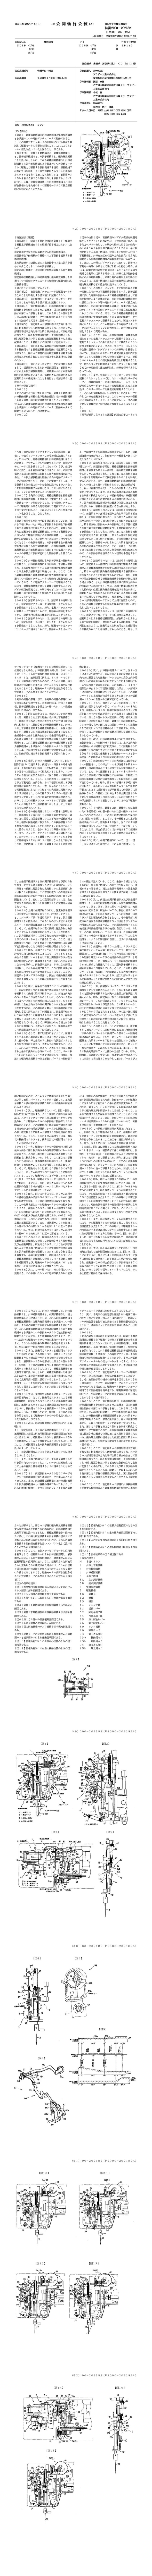 JP2000202182A 0 - 缝纫机专利翻译日译中